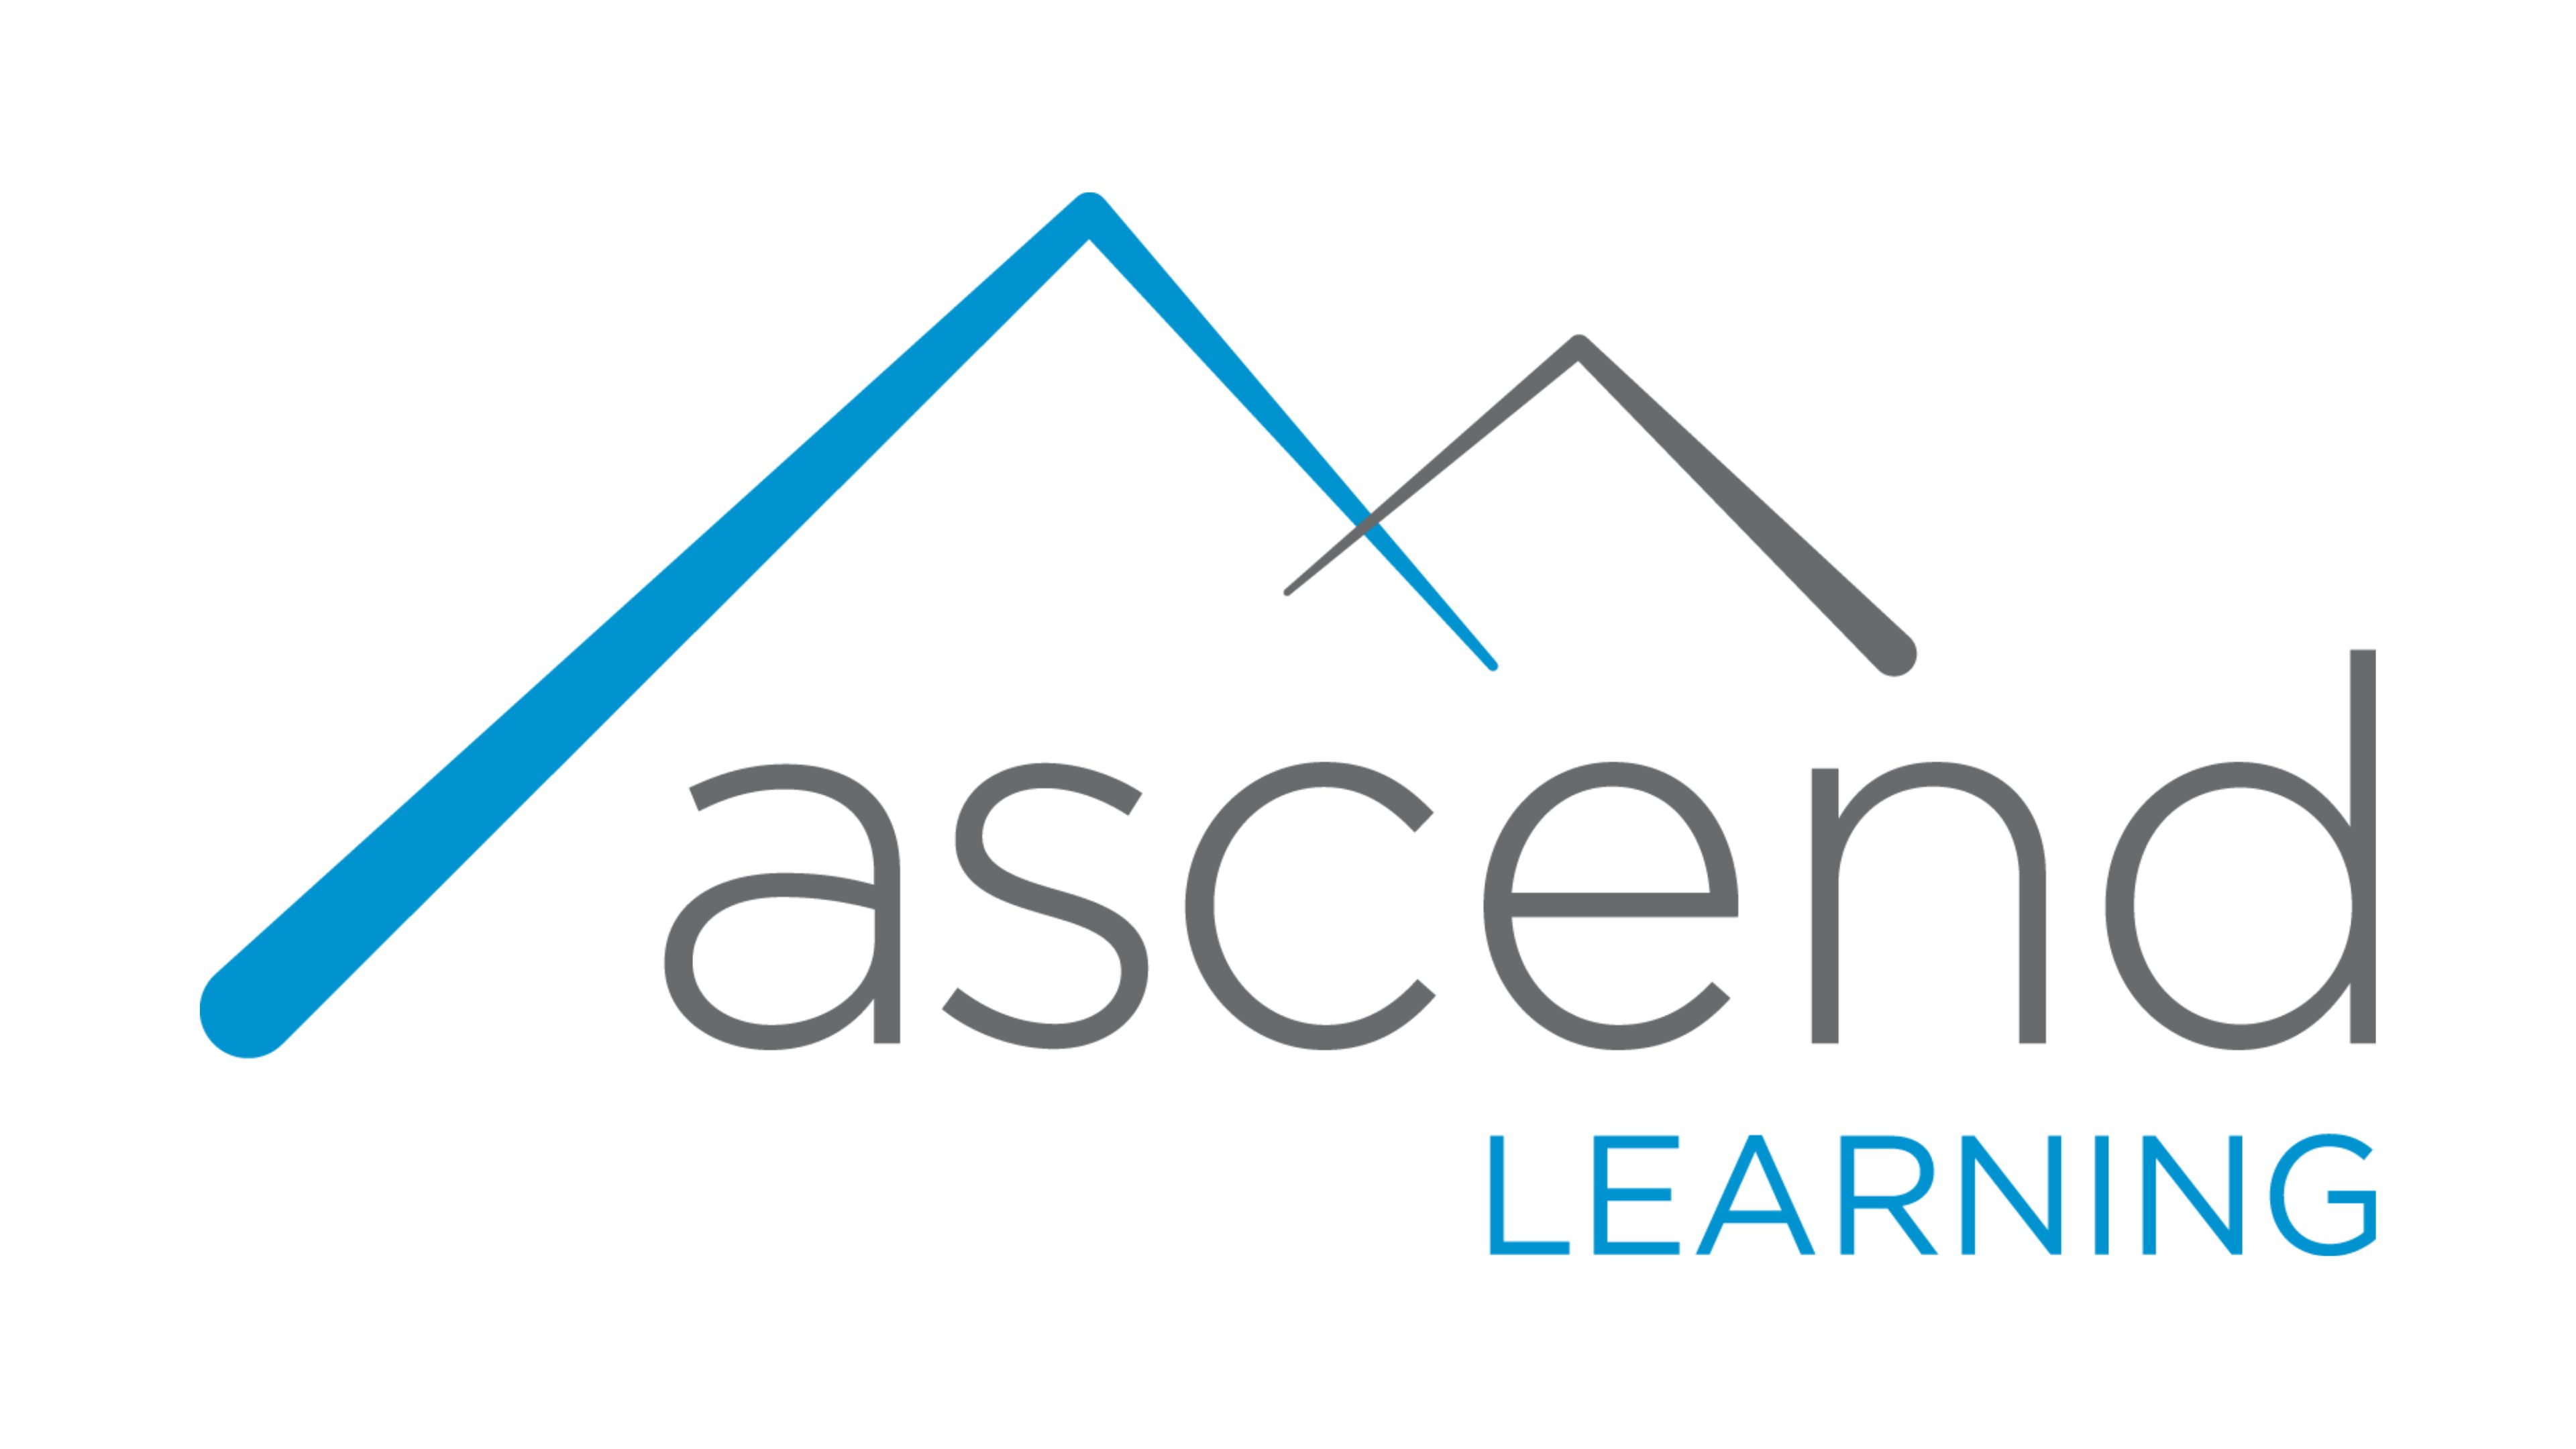 Ascend Learning Logo